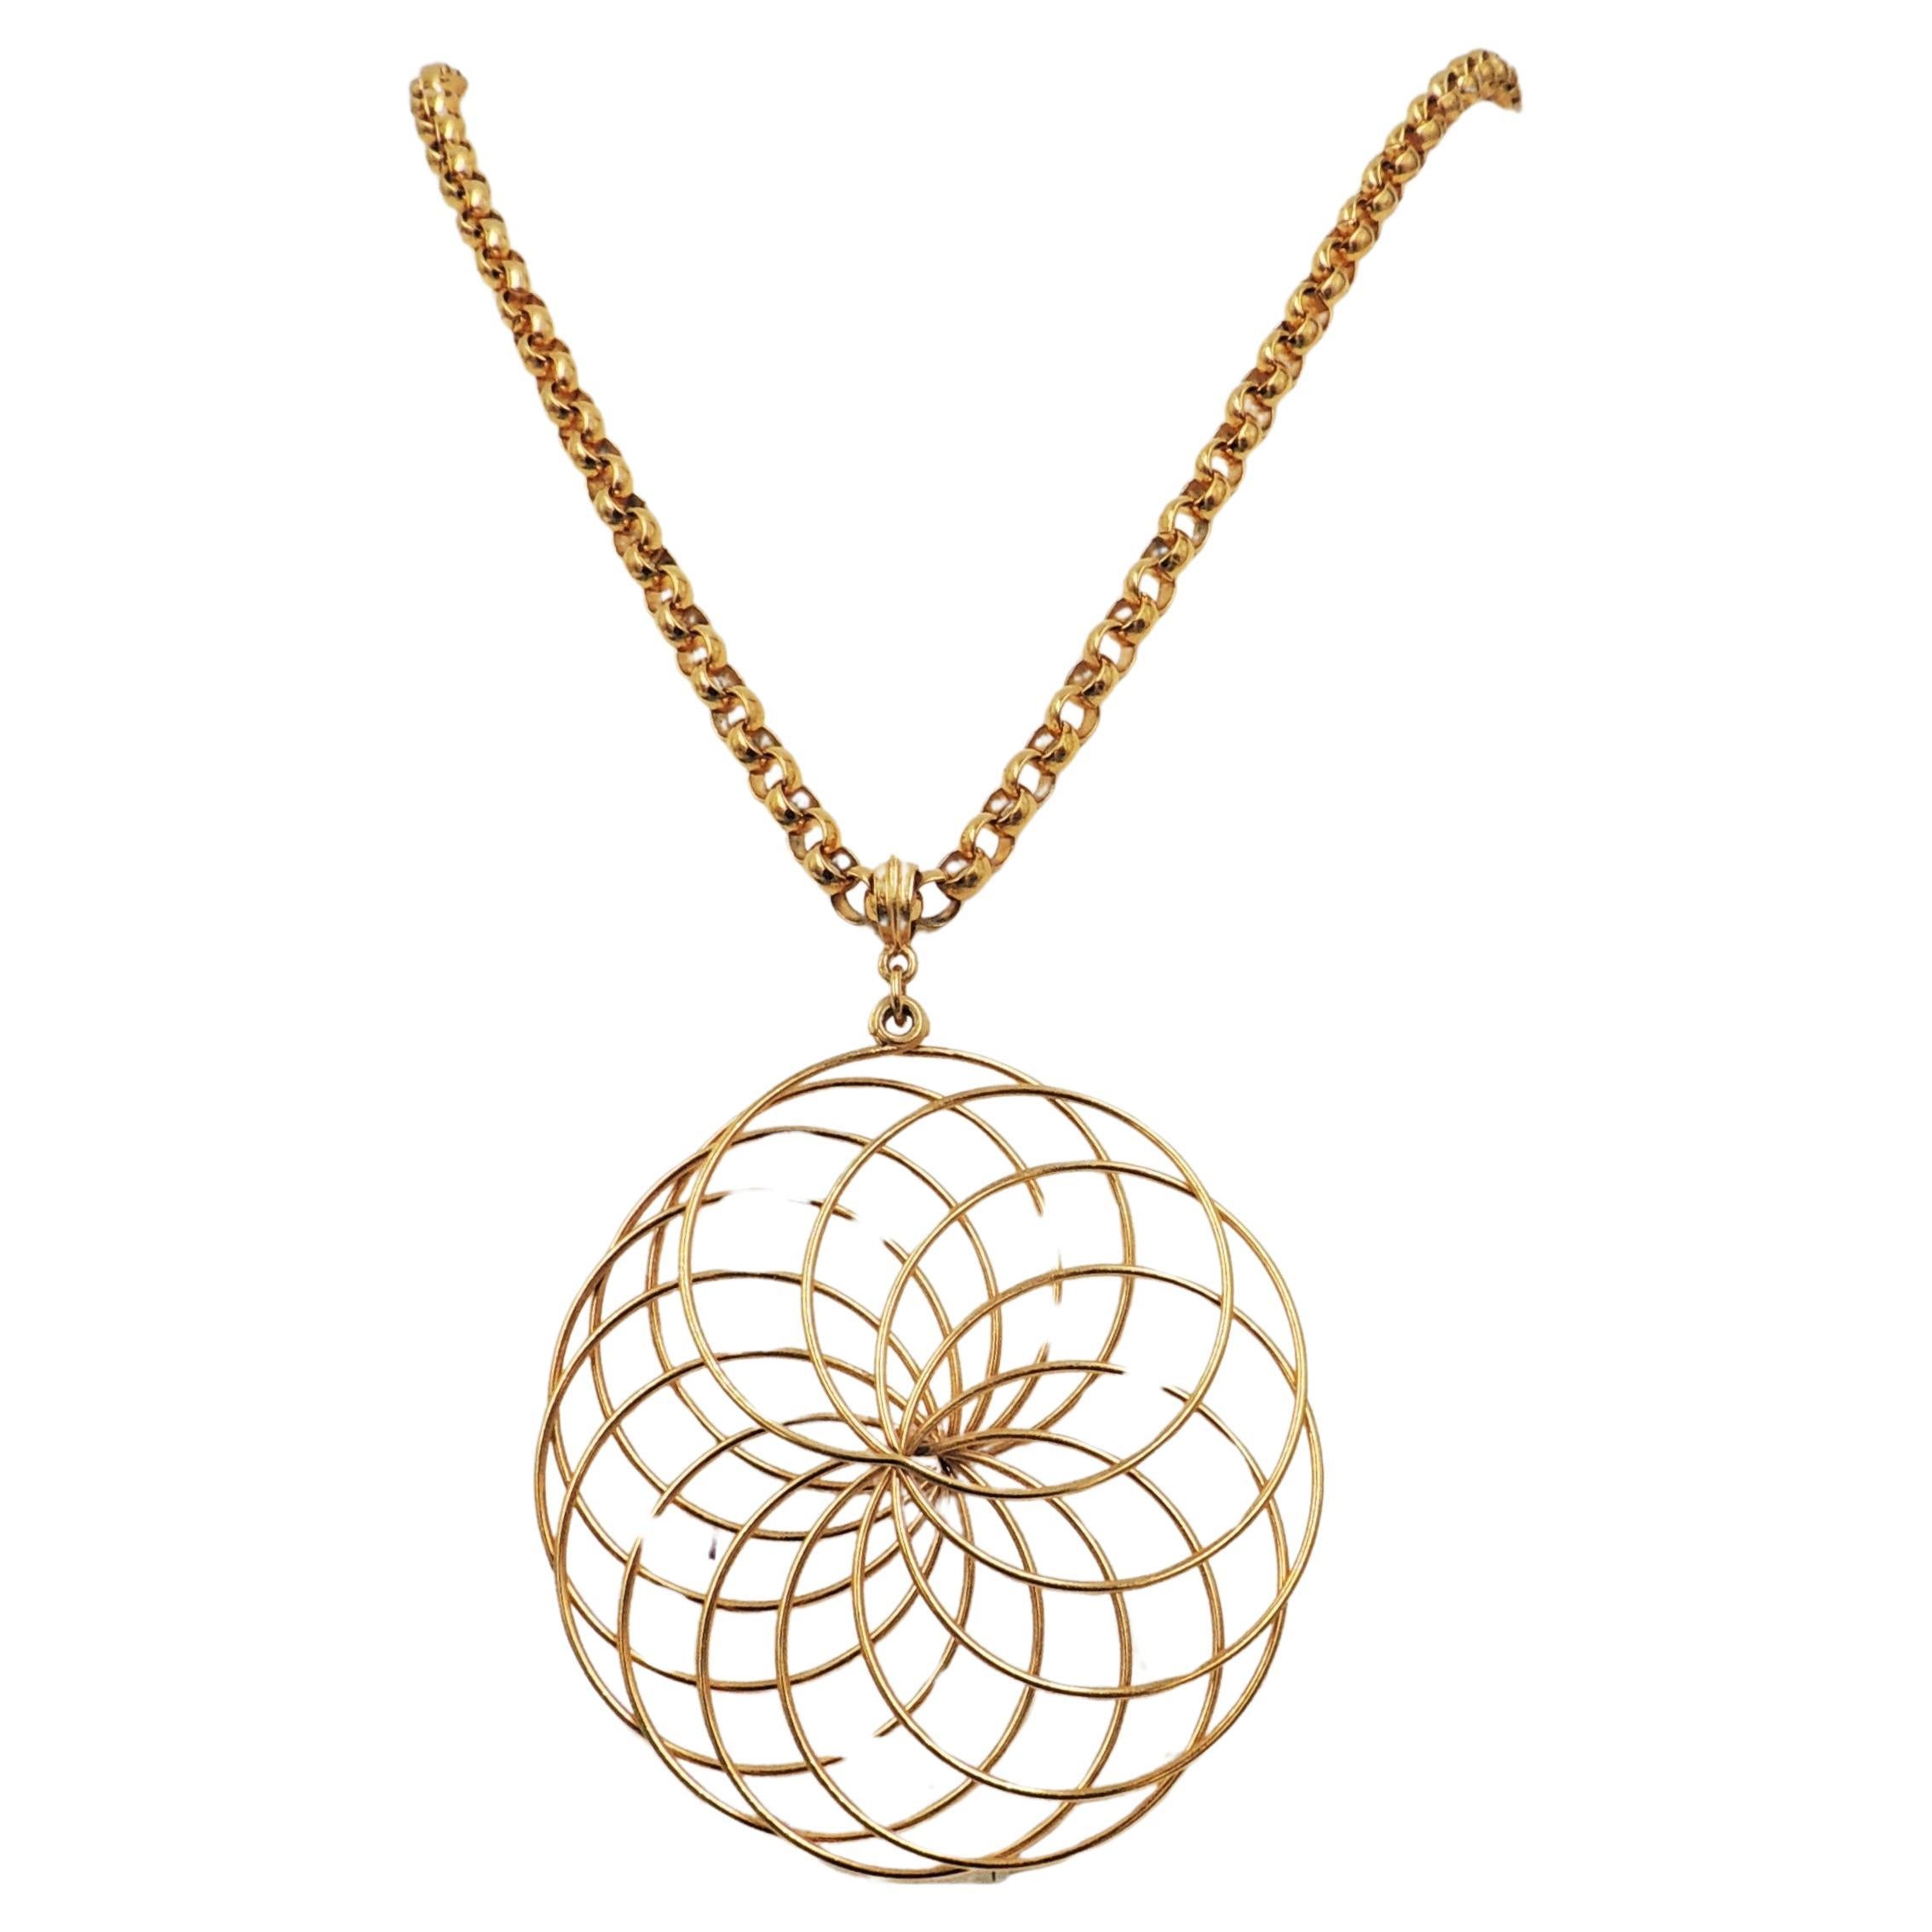 Vintage Signed Crown Trifari Goldtone Spiral Pendant Necklace, 1974 Ad Piece For Sale